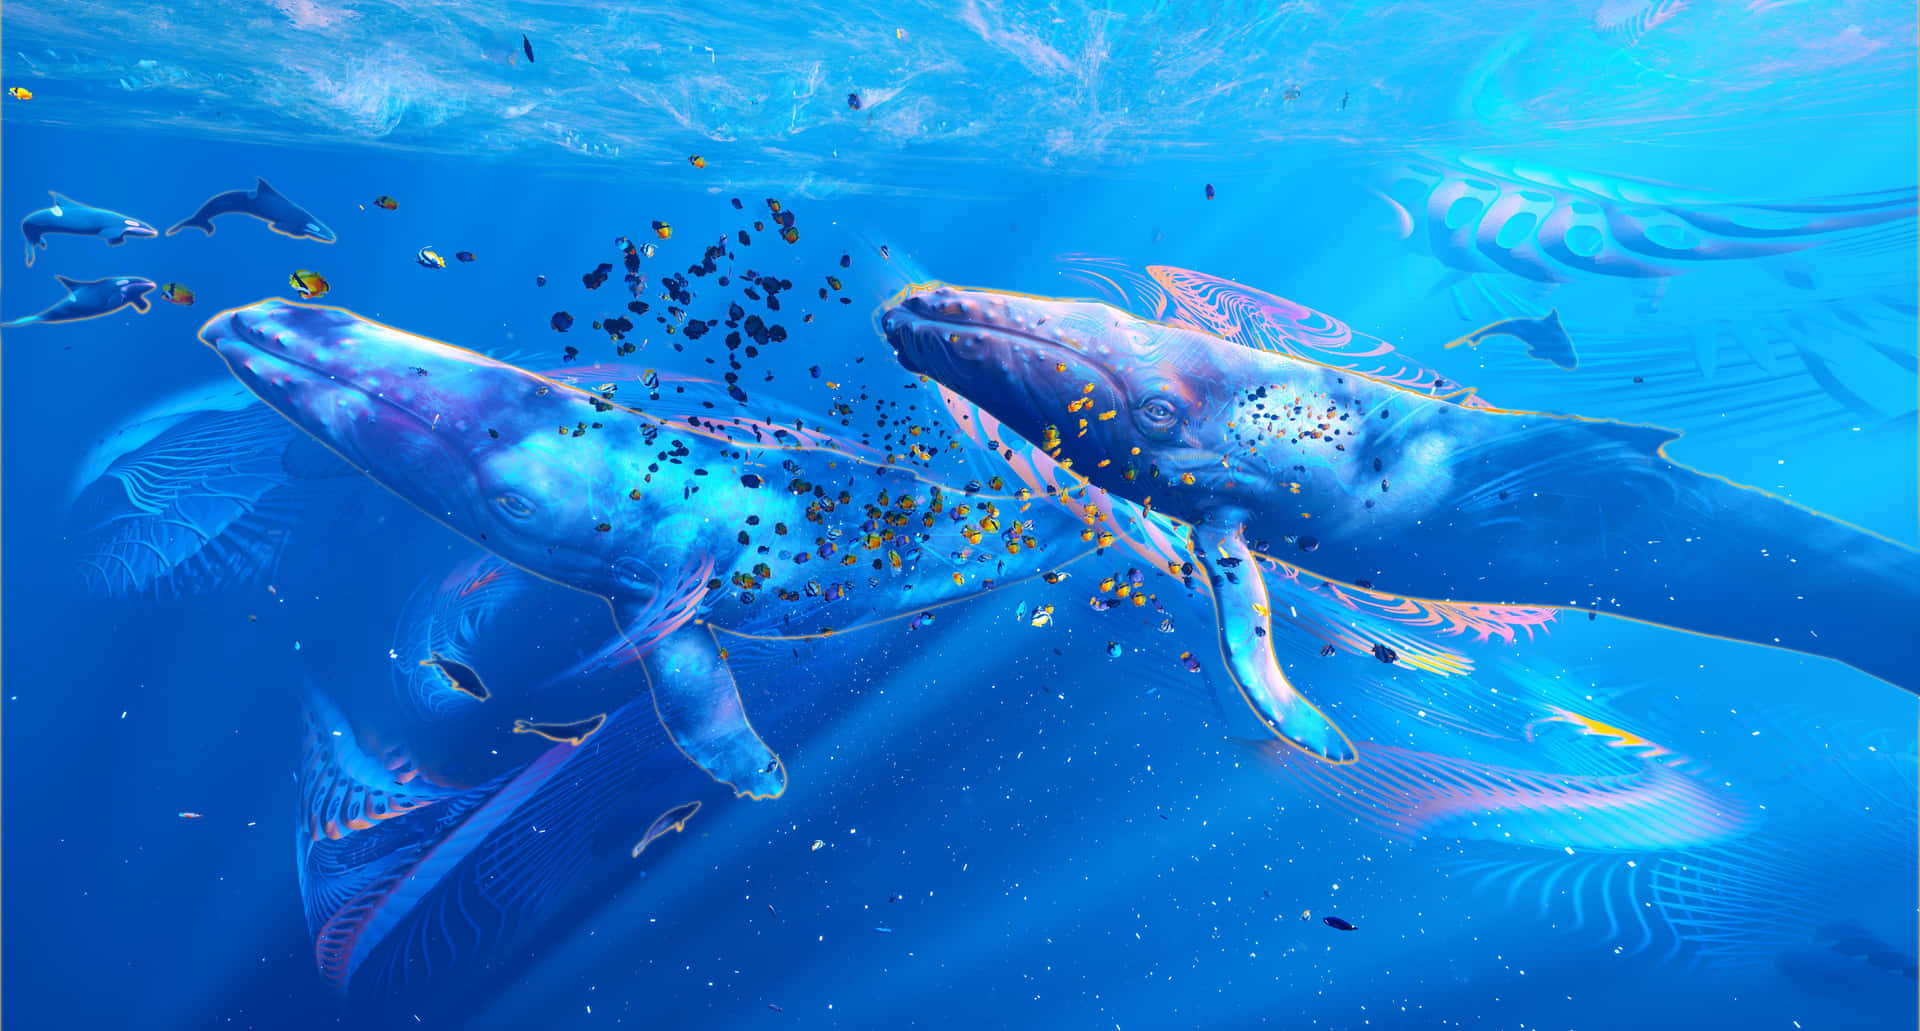 Blue Whale Humpback Whale Digital Art Picture